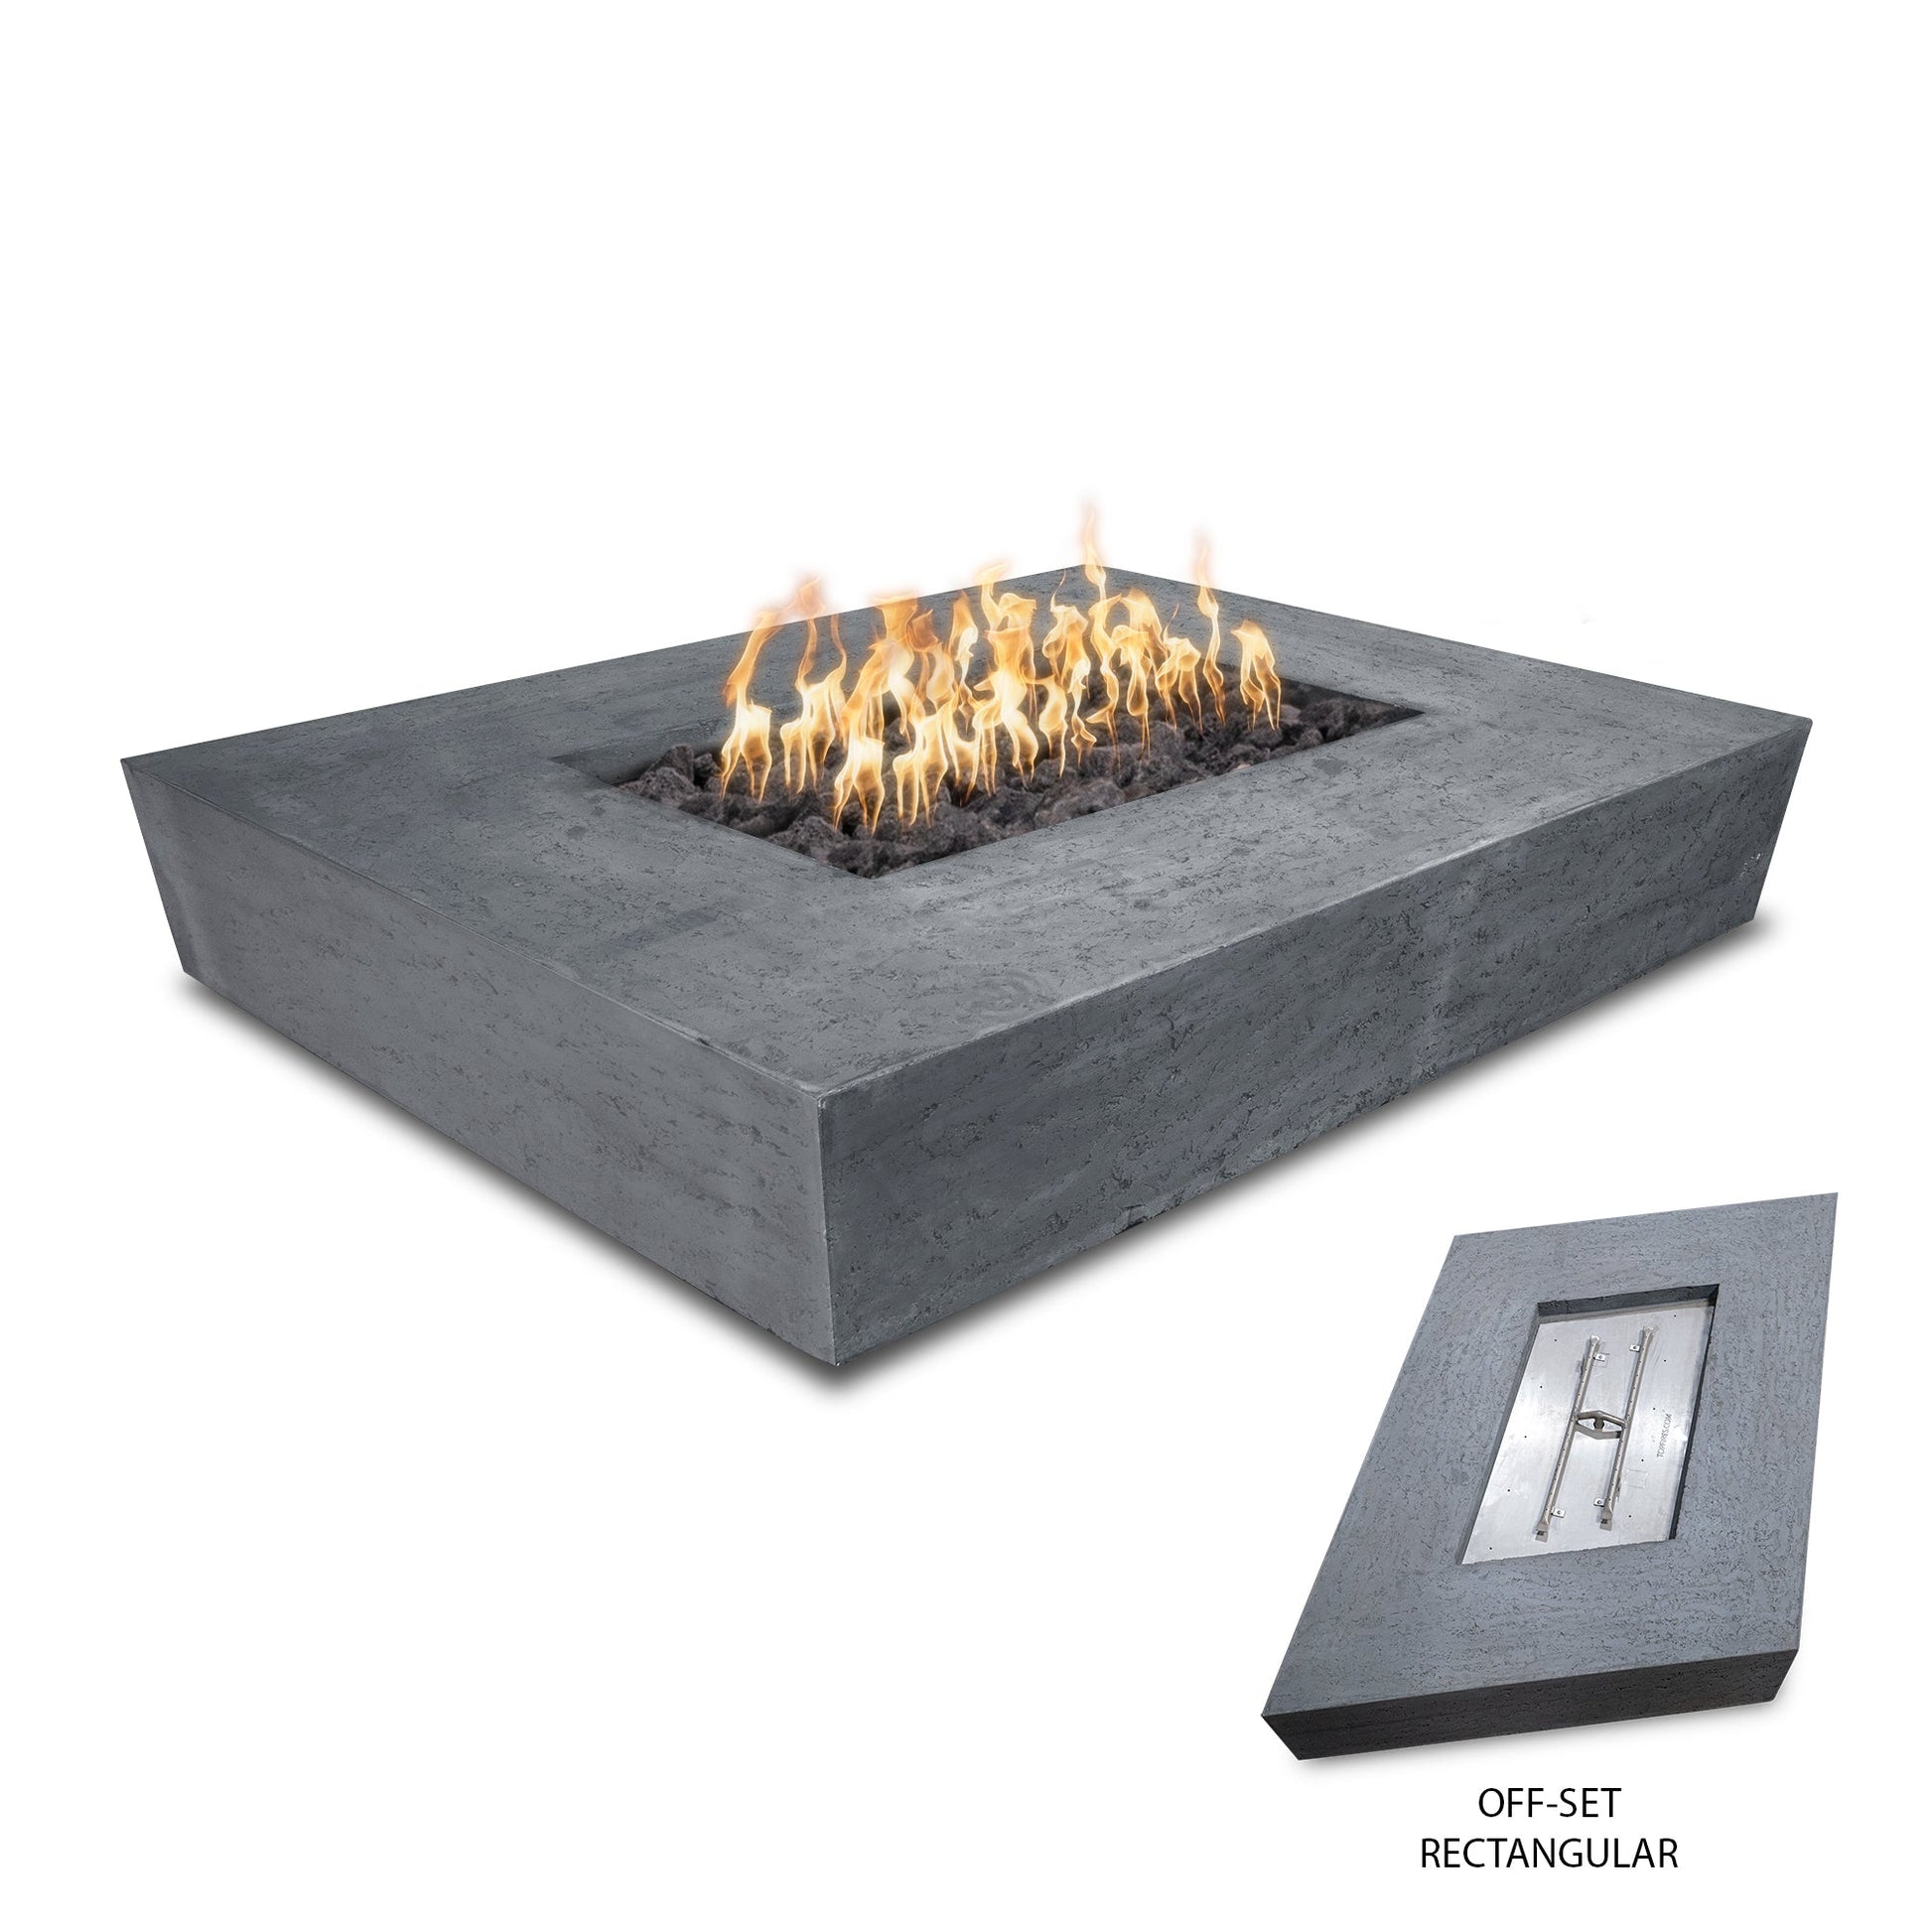 The Outdoor Plus Rectangular Heiko 58" Metallic Bronze GFRC Concrete Liquid Propane Fire Pit with Match Lit with Flame Sense Ignition